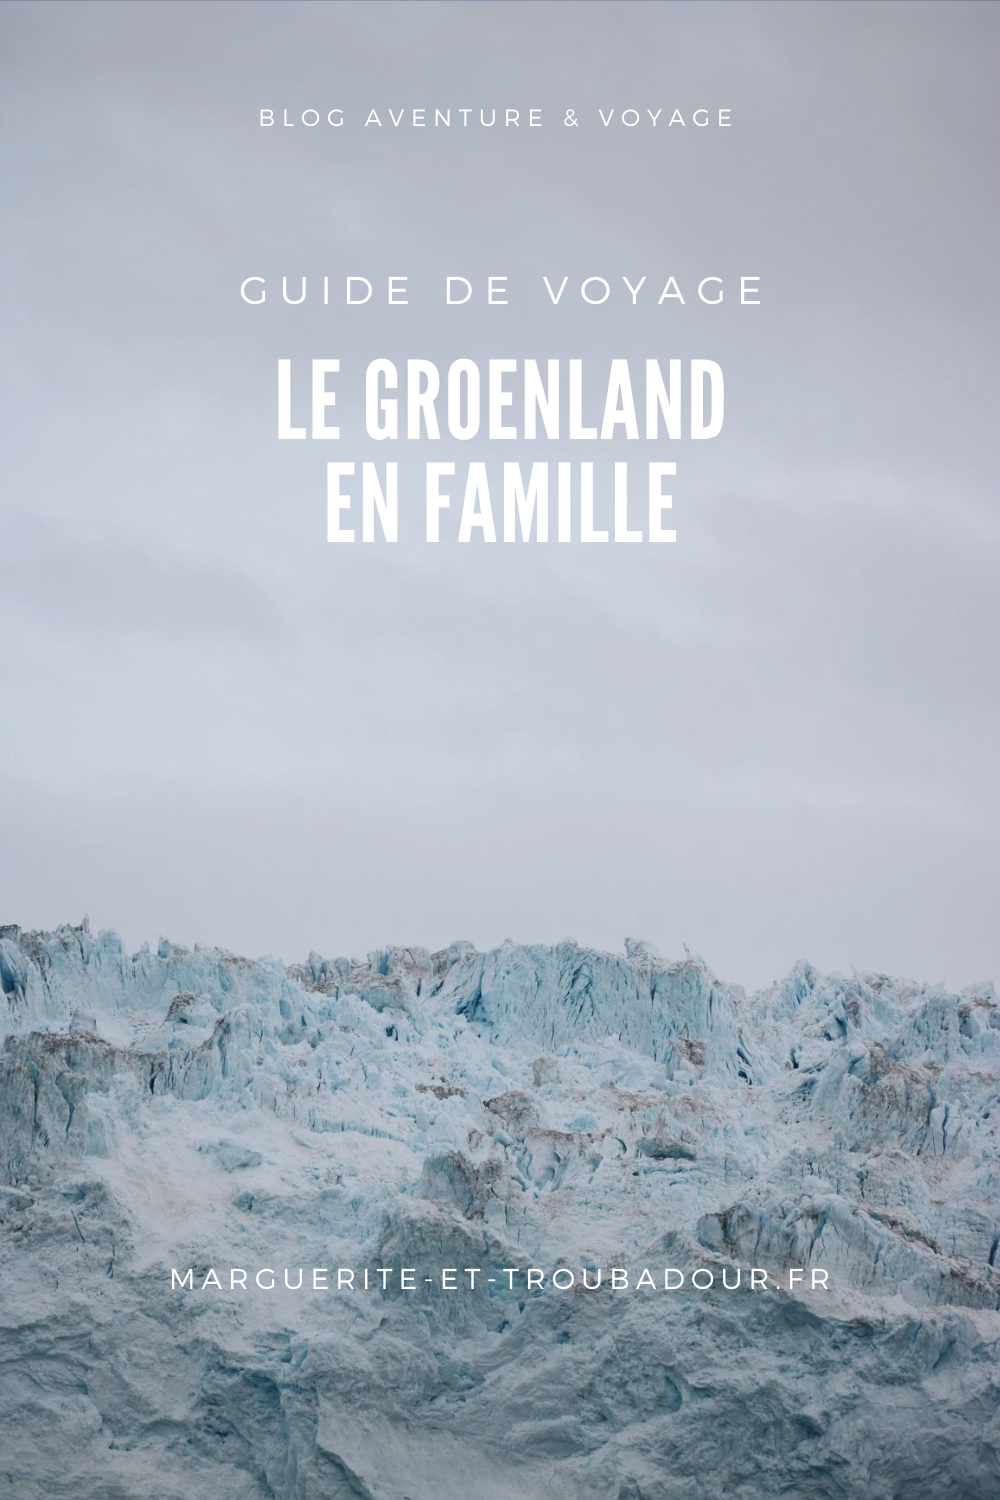 Organiser son voyage au Groenland en famille - Blog voyage en famille - Blog voyage aventure - Blog voyage polaire